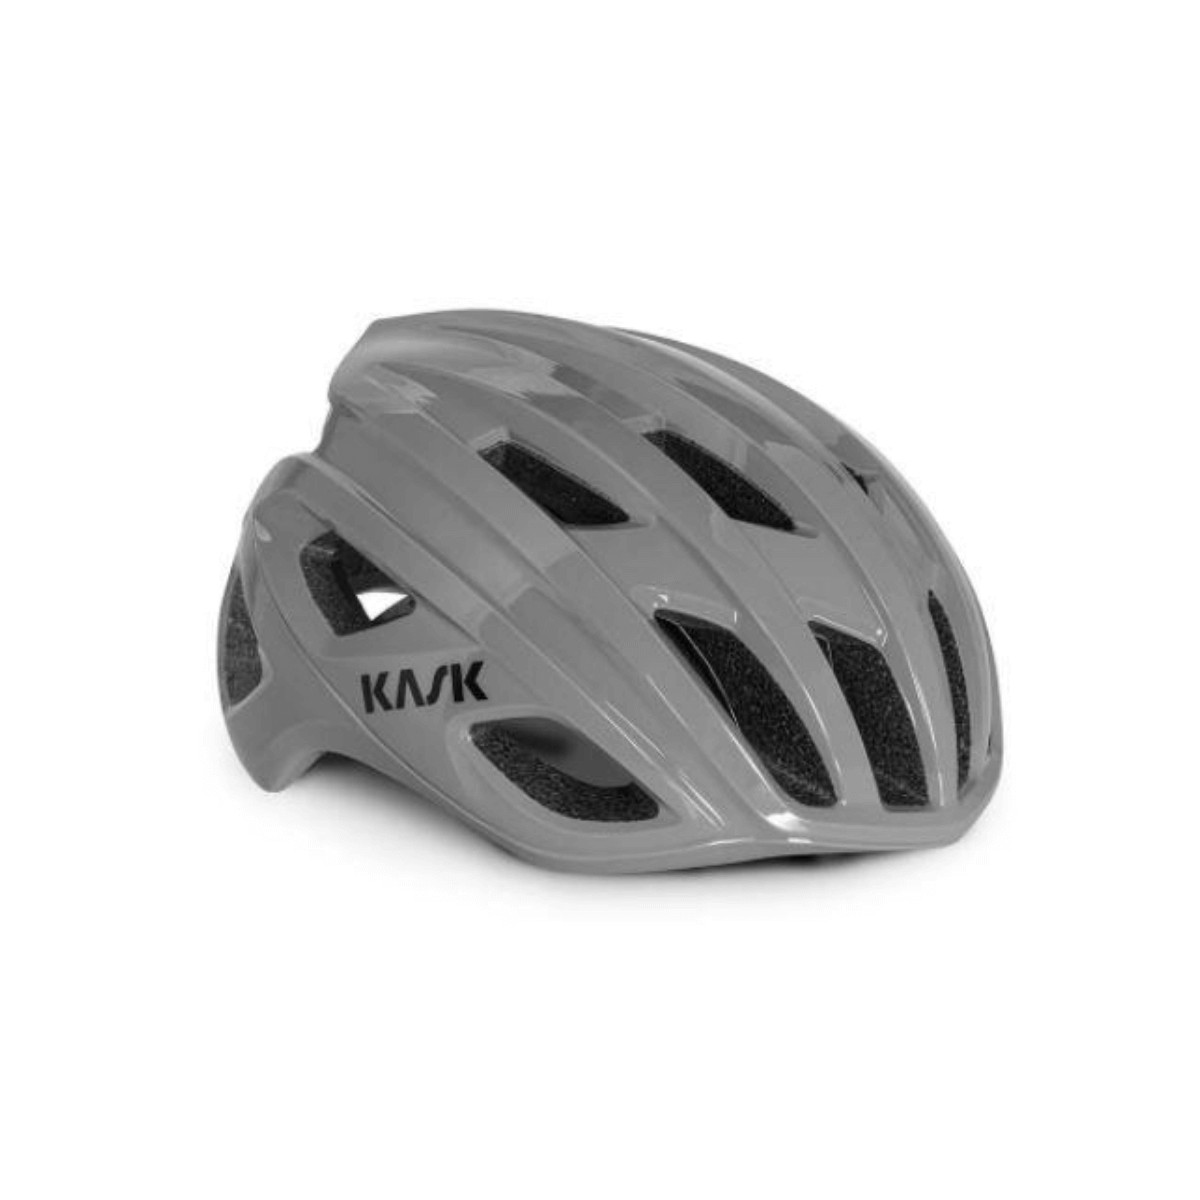 Kask Mojito 3 Helmet Gray, Size L